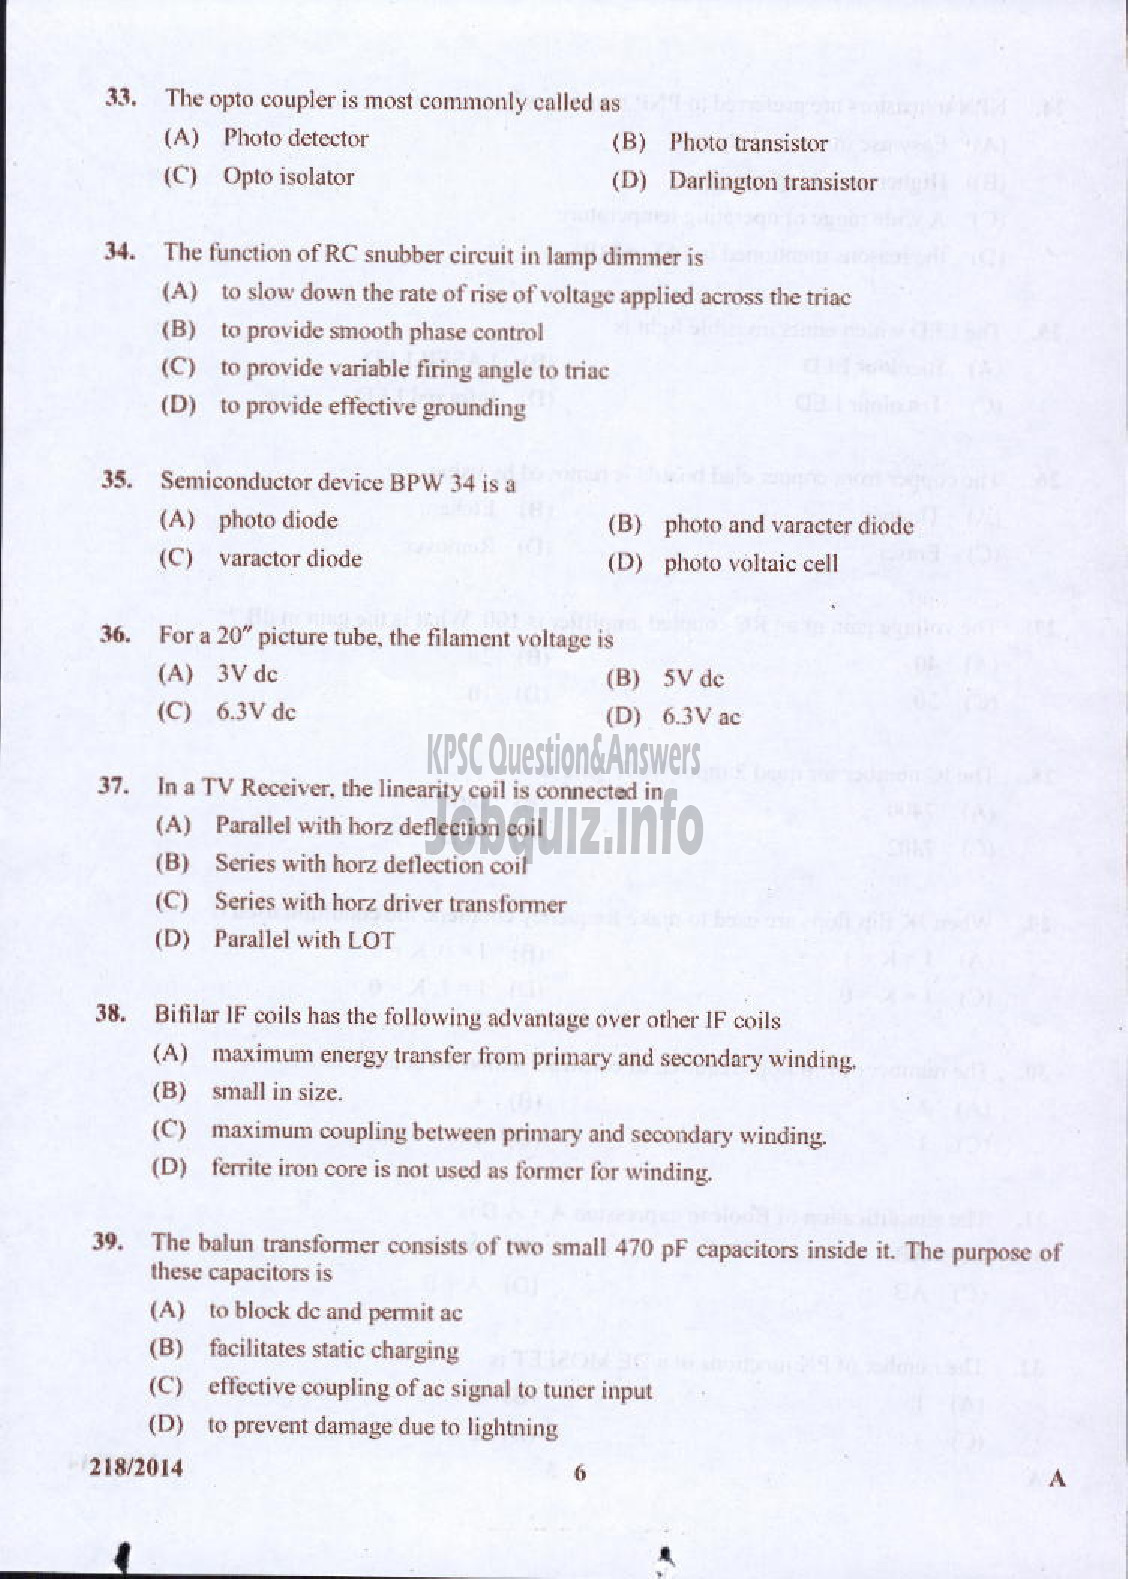 Kerala PSC Question Paper - LABORATORY TECHNICAL ASSISTANT MRRTV VHSE-6